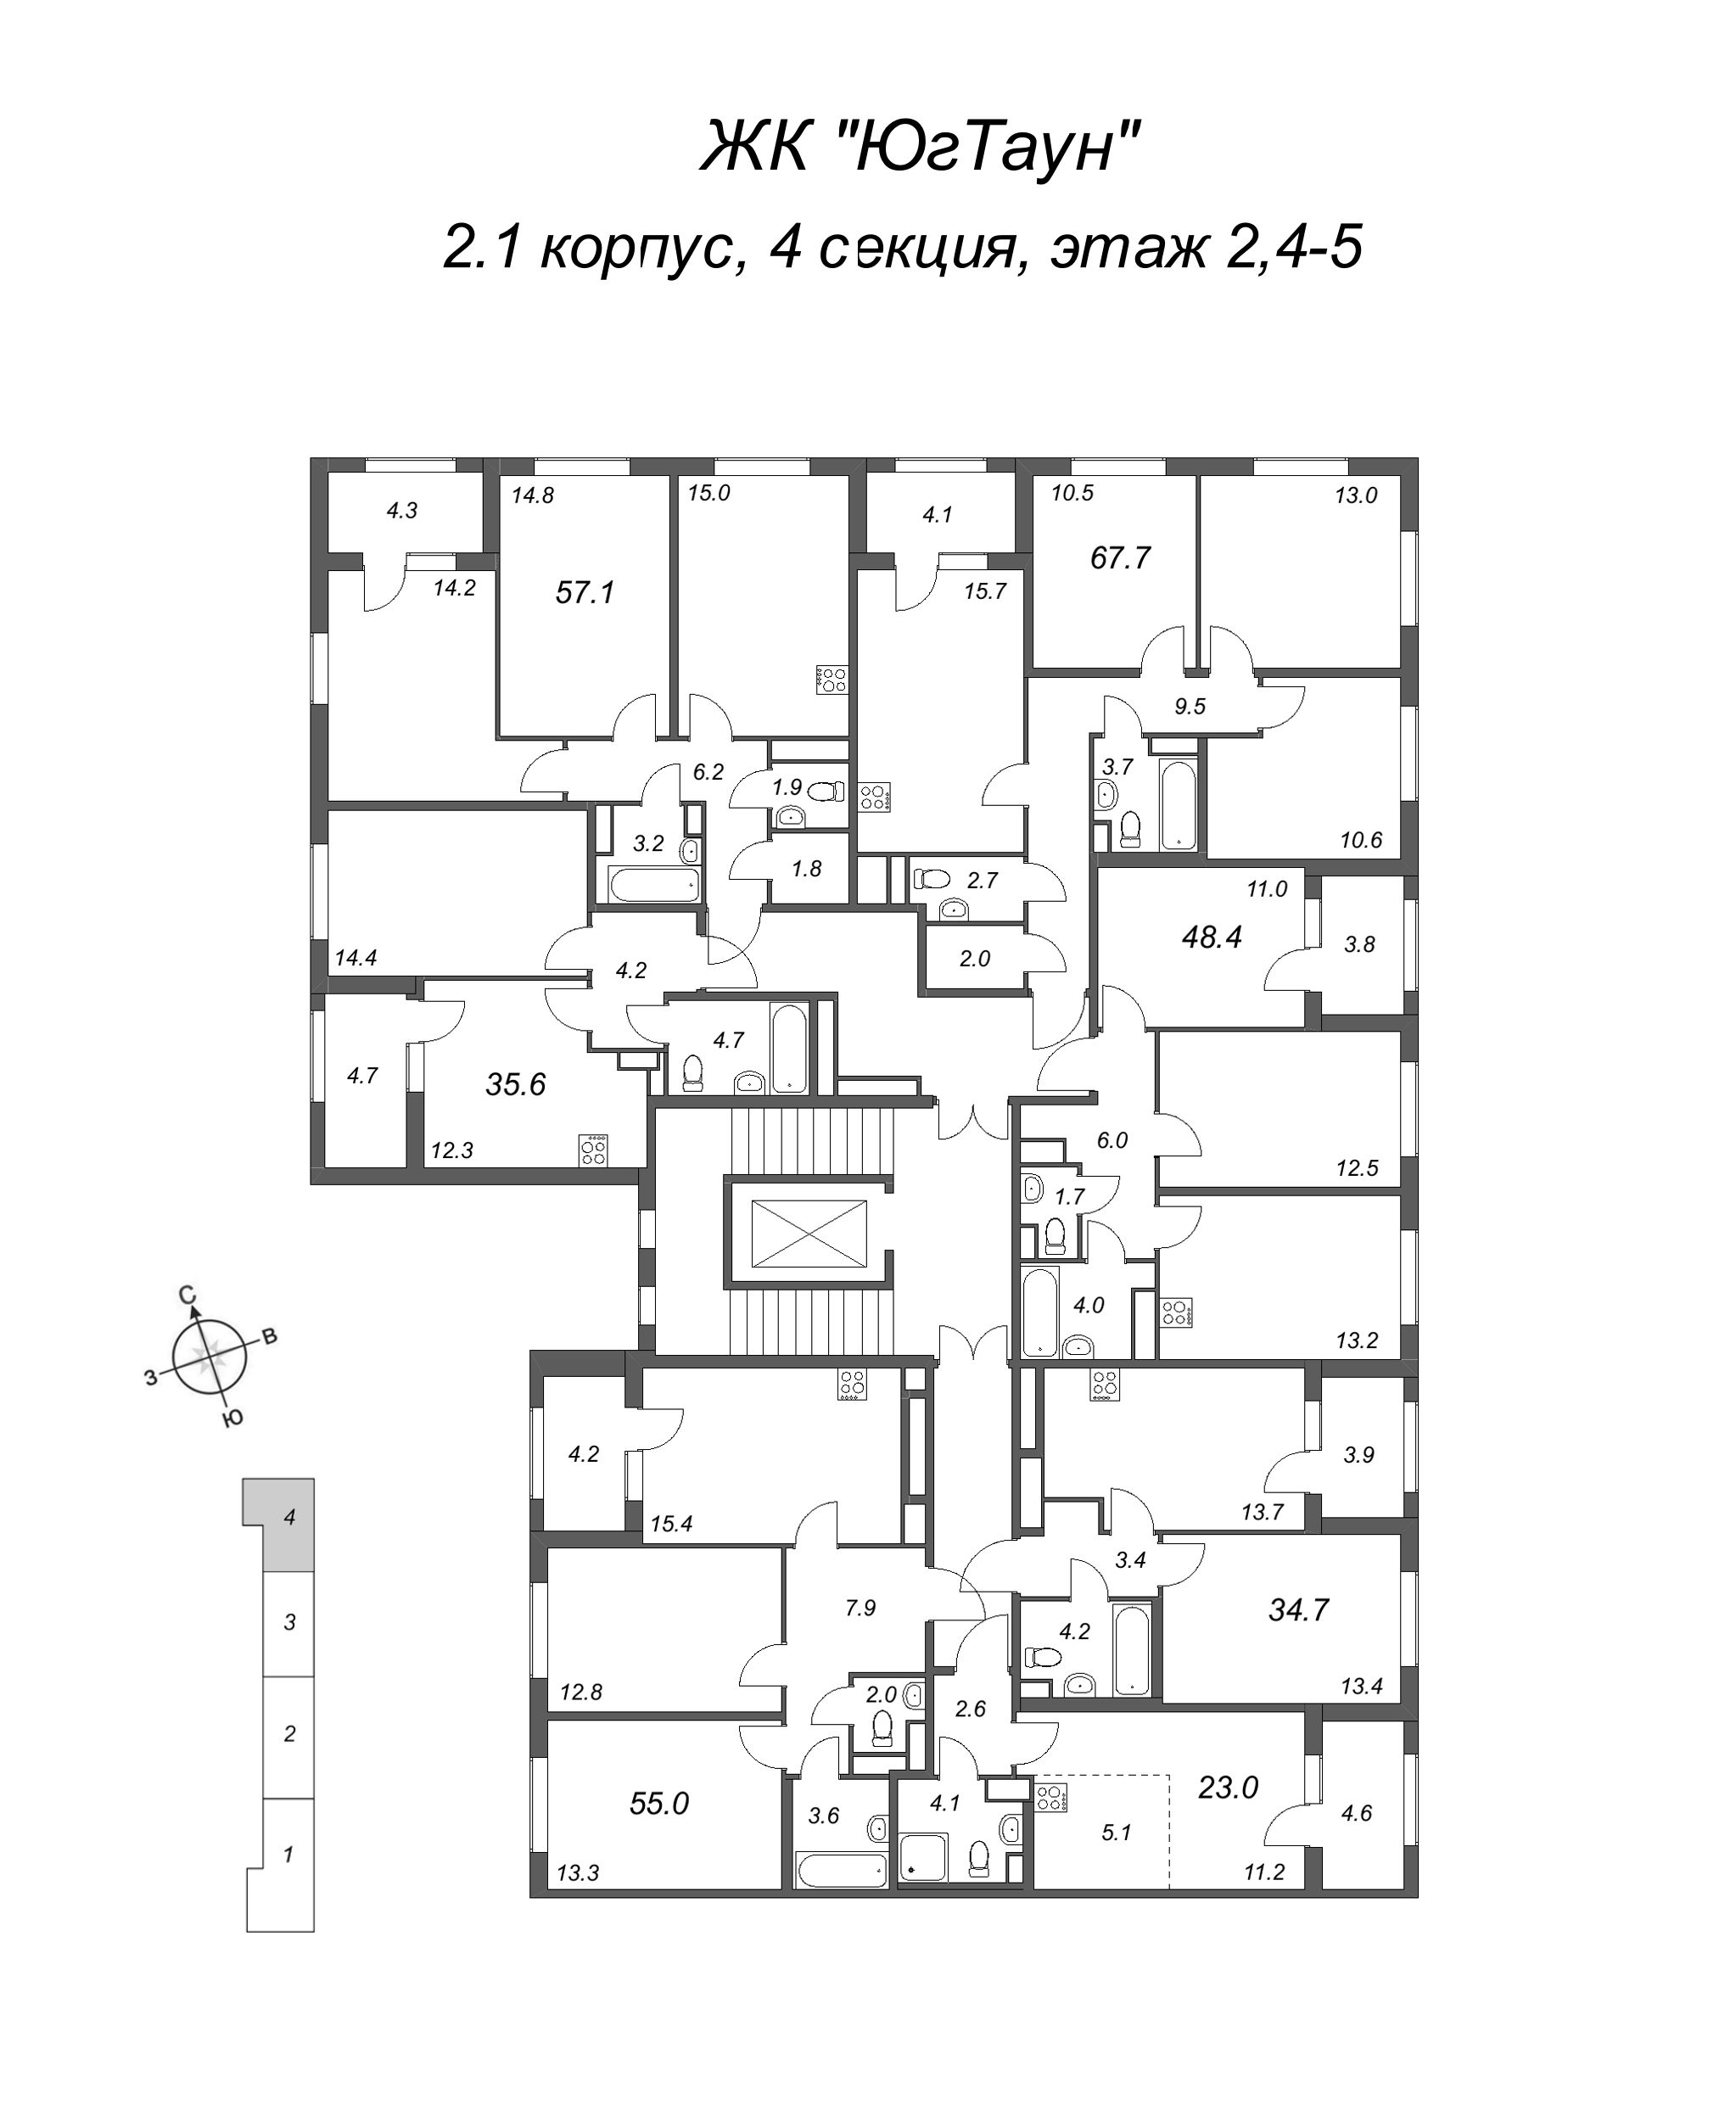 3-комнатная (Евро) квартира, 57.1 м² - планировка этажа